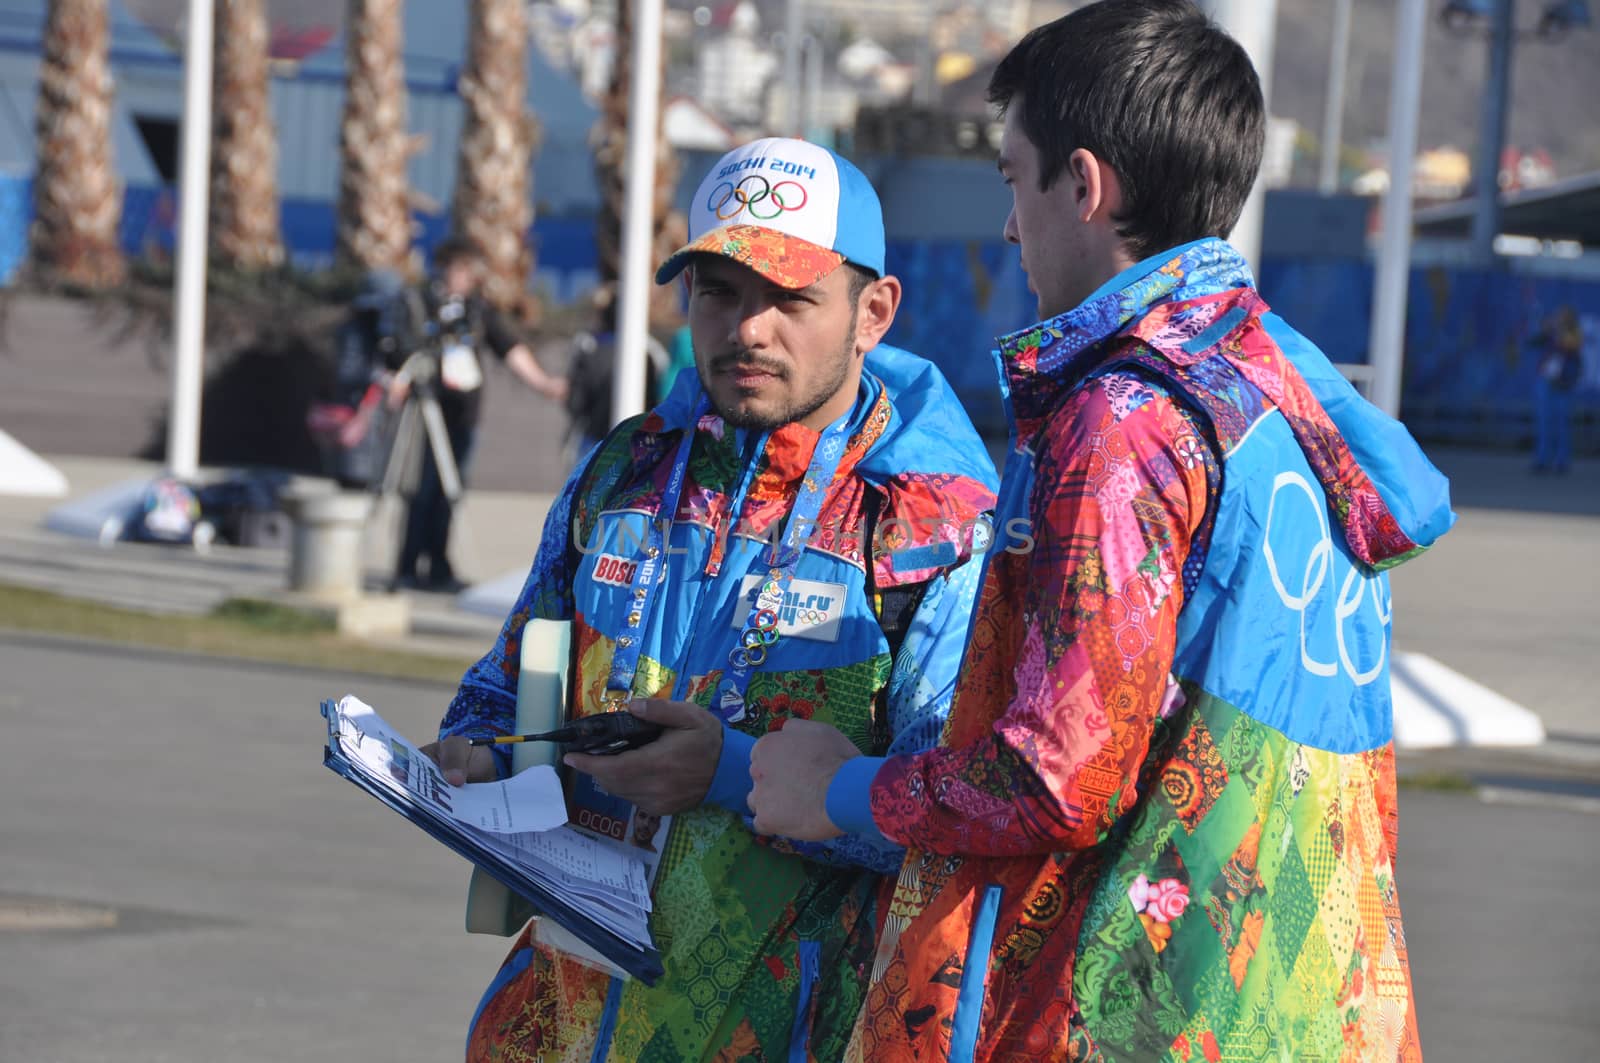 Volunteers at XXII Winter Olympic Games Sochi 2014, Russia